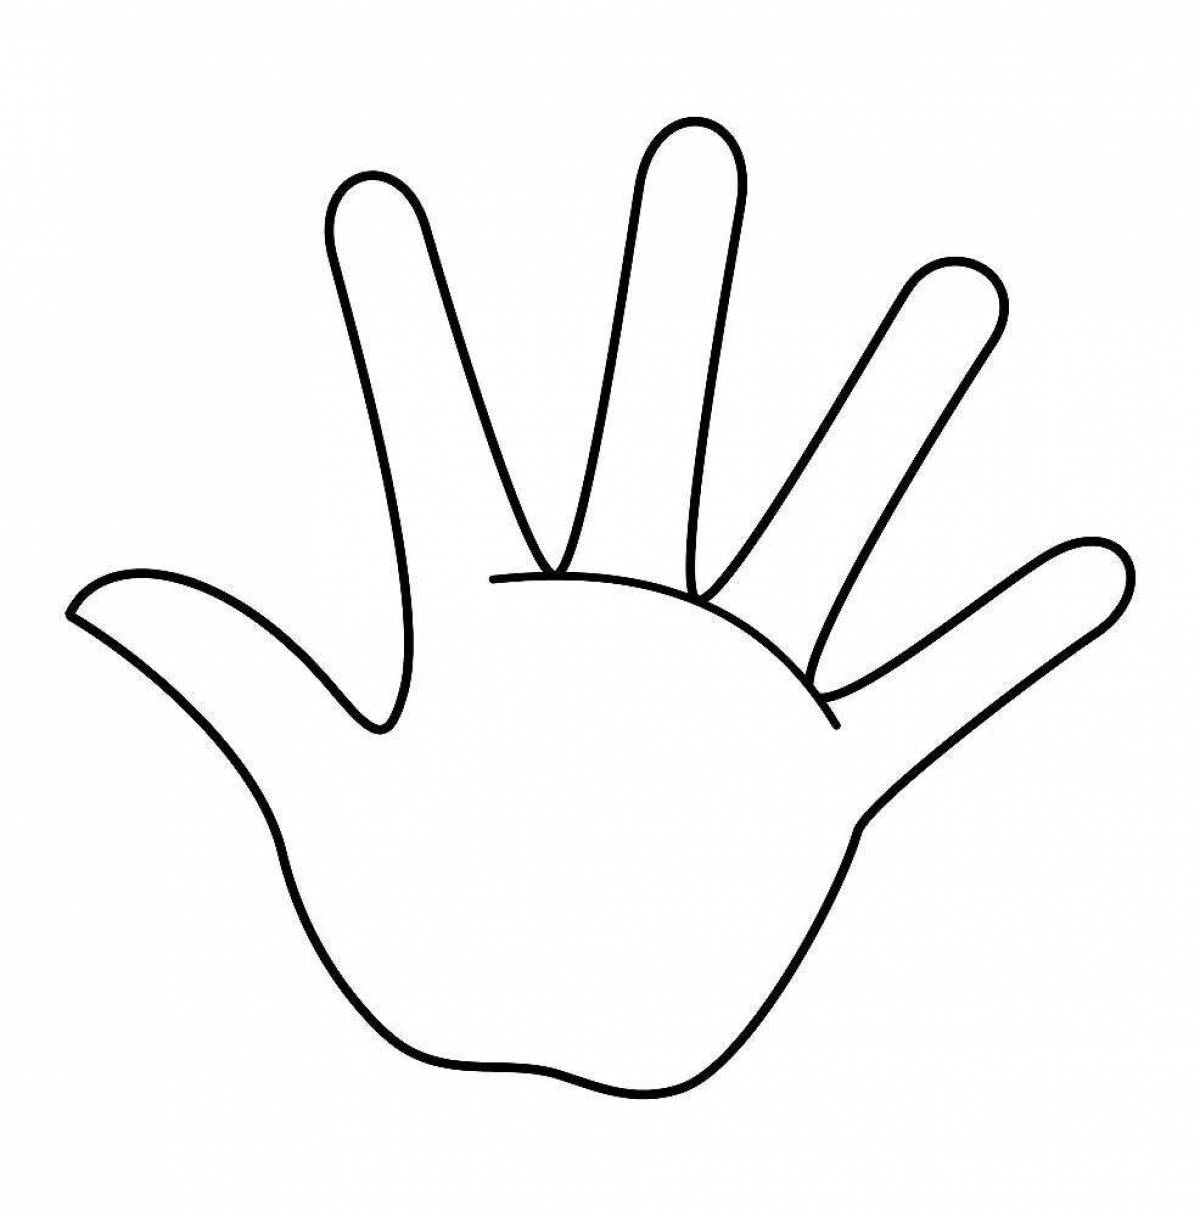 Human hand #2